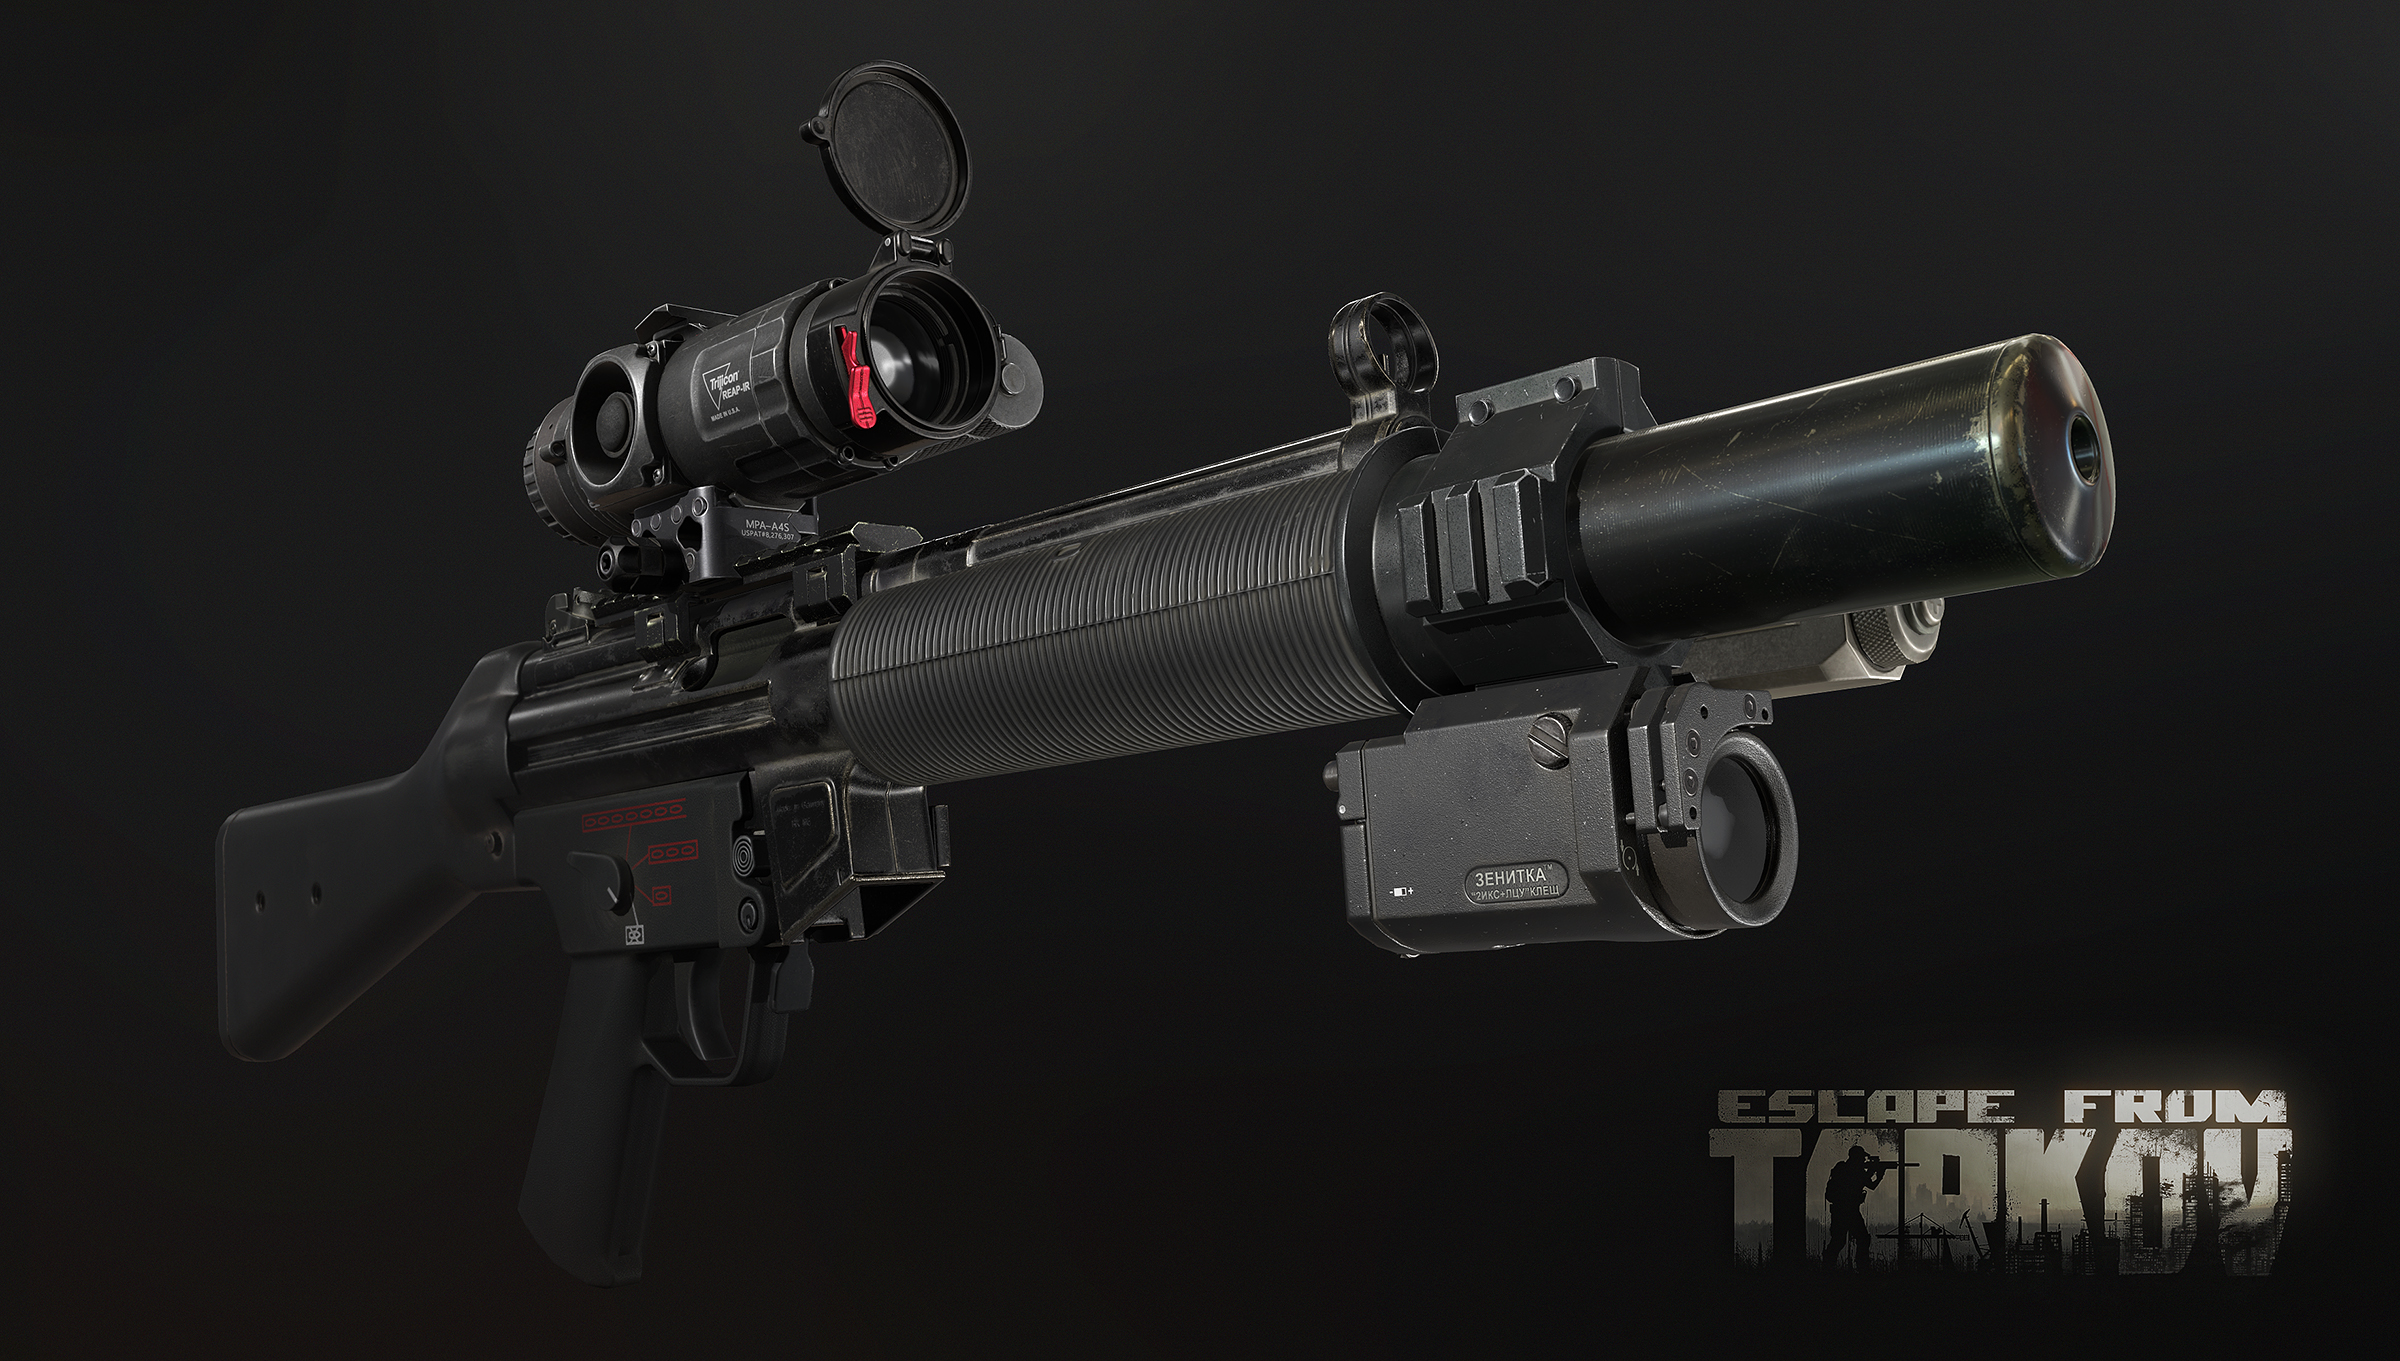 Escape from Tarkov Скриншоты пистолета-пулемета HK MP5 и его вариаций в Escape from Tarkov - 4